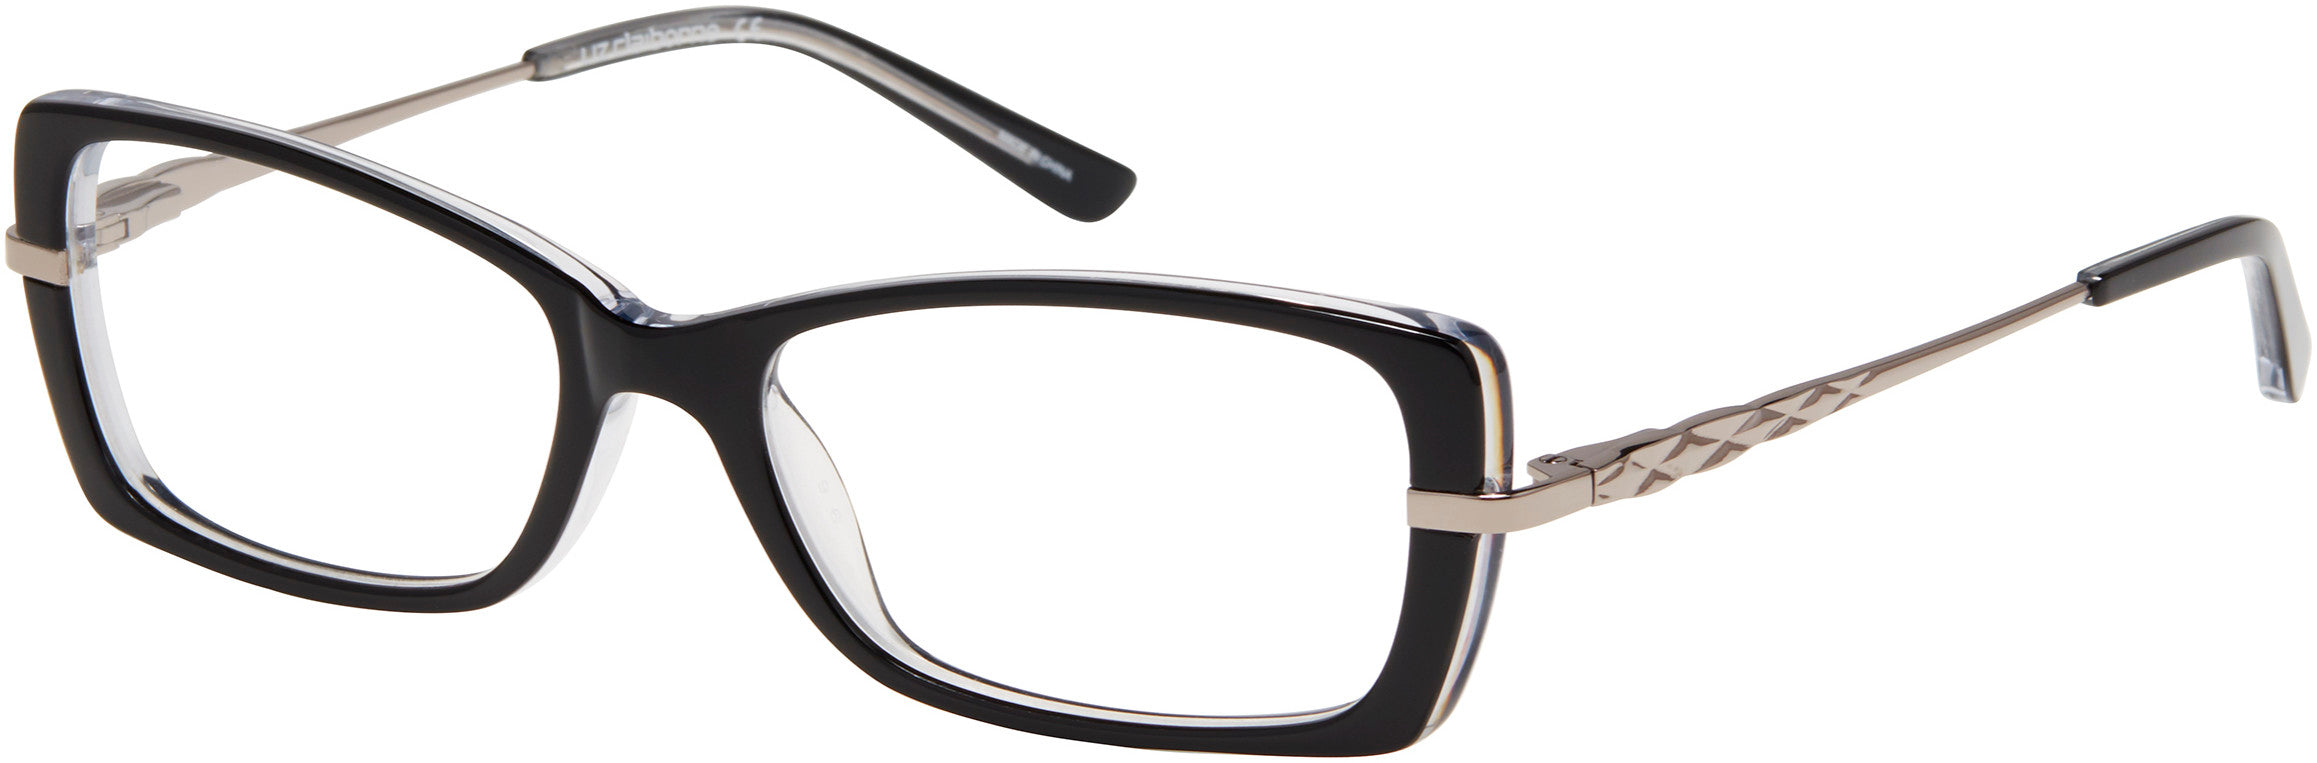  Liz Claiborne 659 Rectangular Eyeglasses 07C5-07C5  Black Crystal (00 Demo Lens)